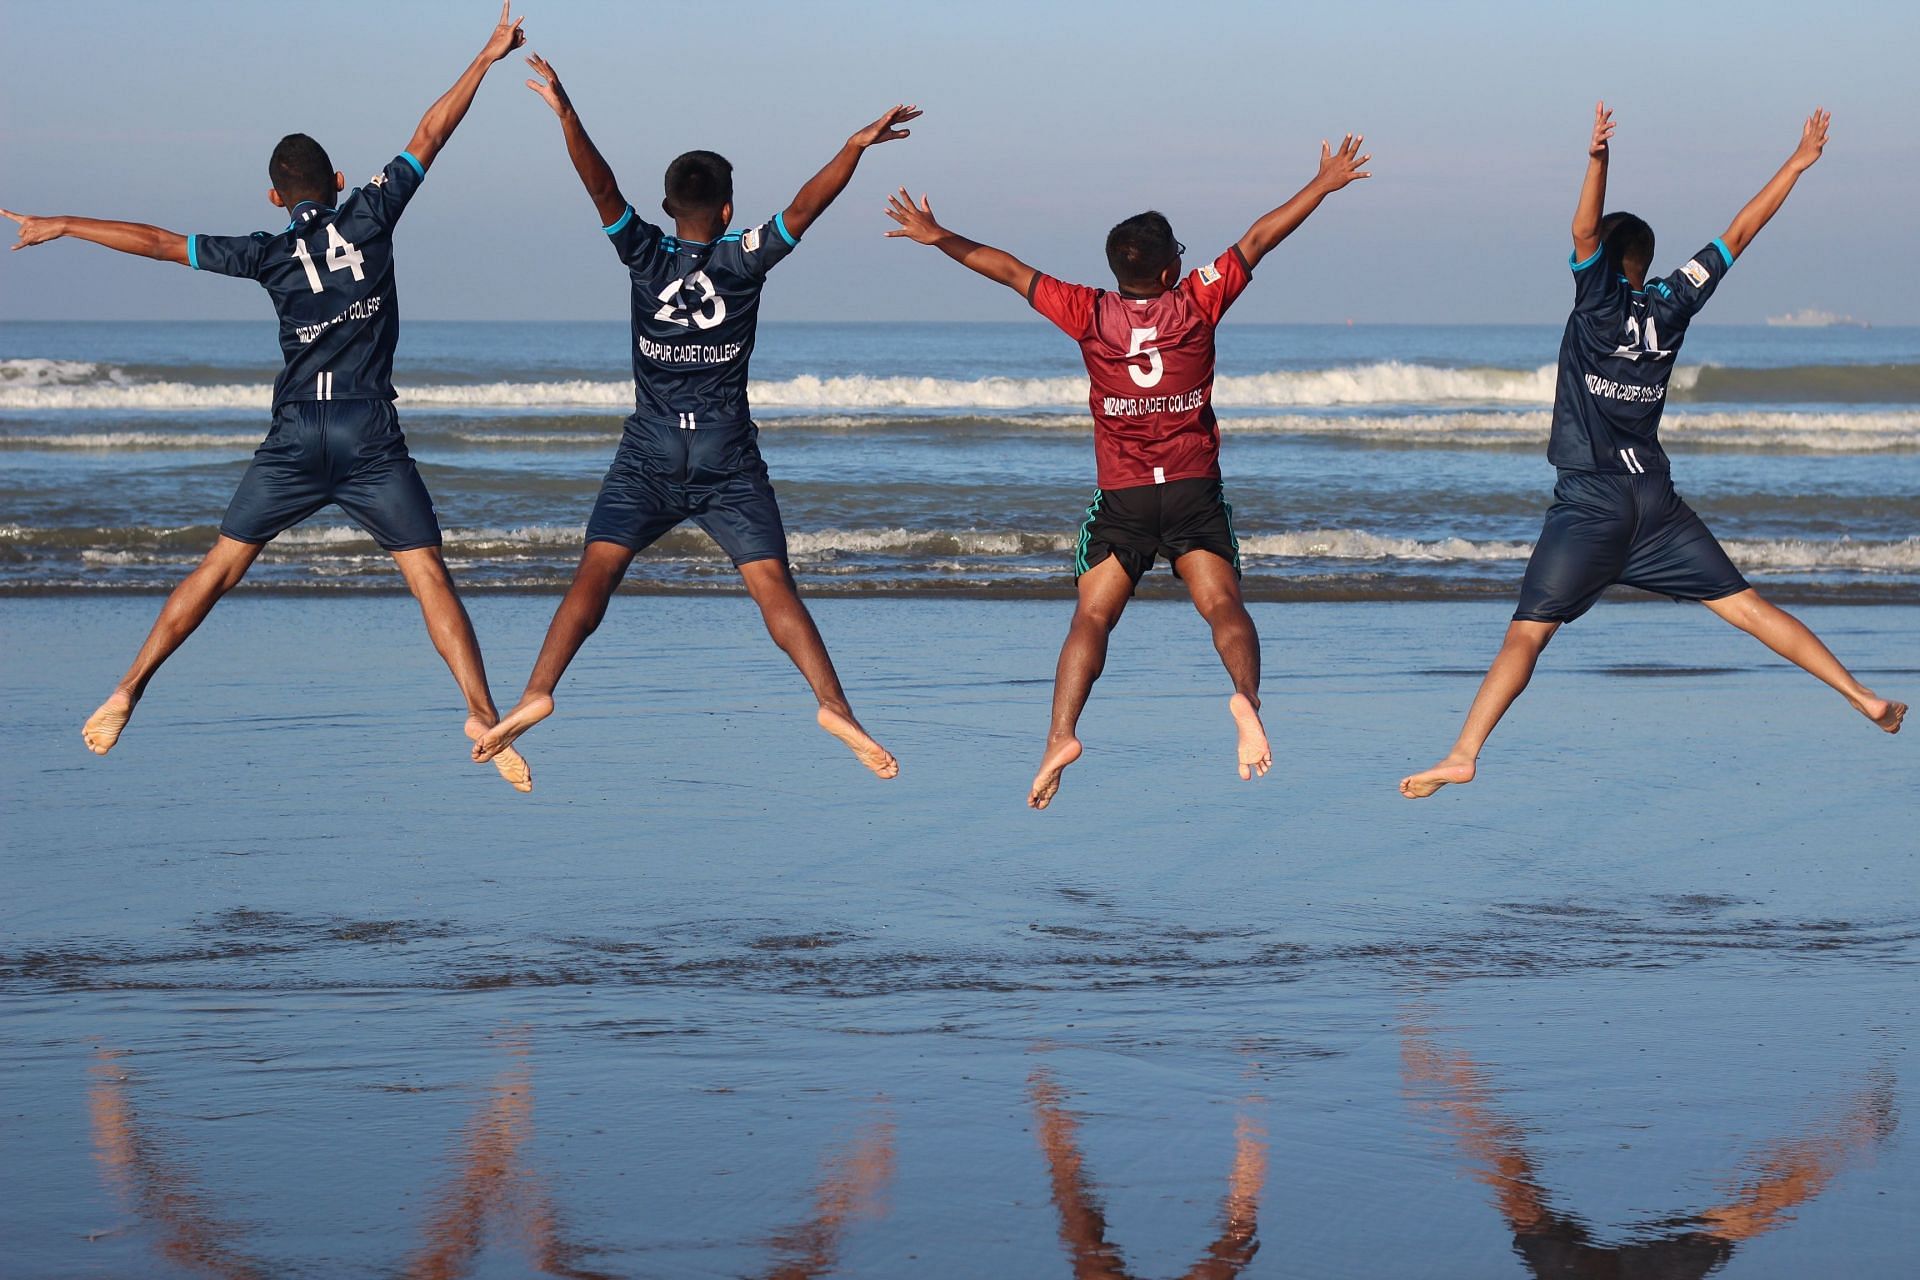 A group of boys jumping (Image via Pexels/Mahmudul Hasan Rifat)